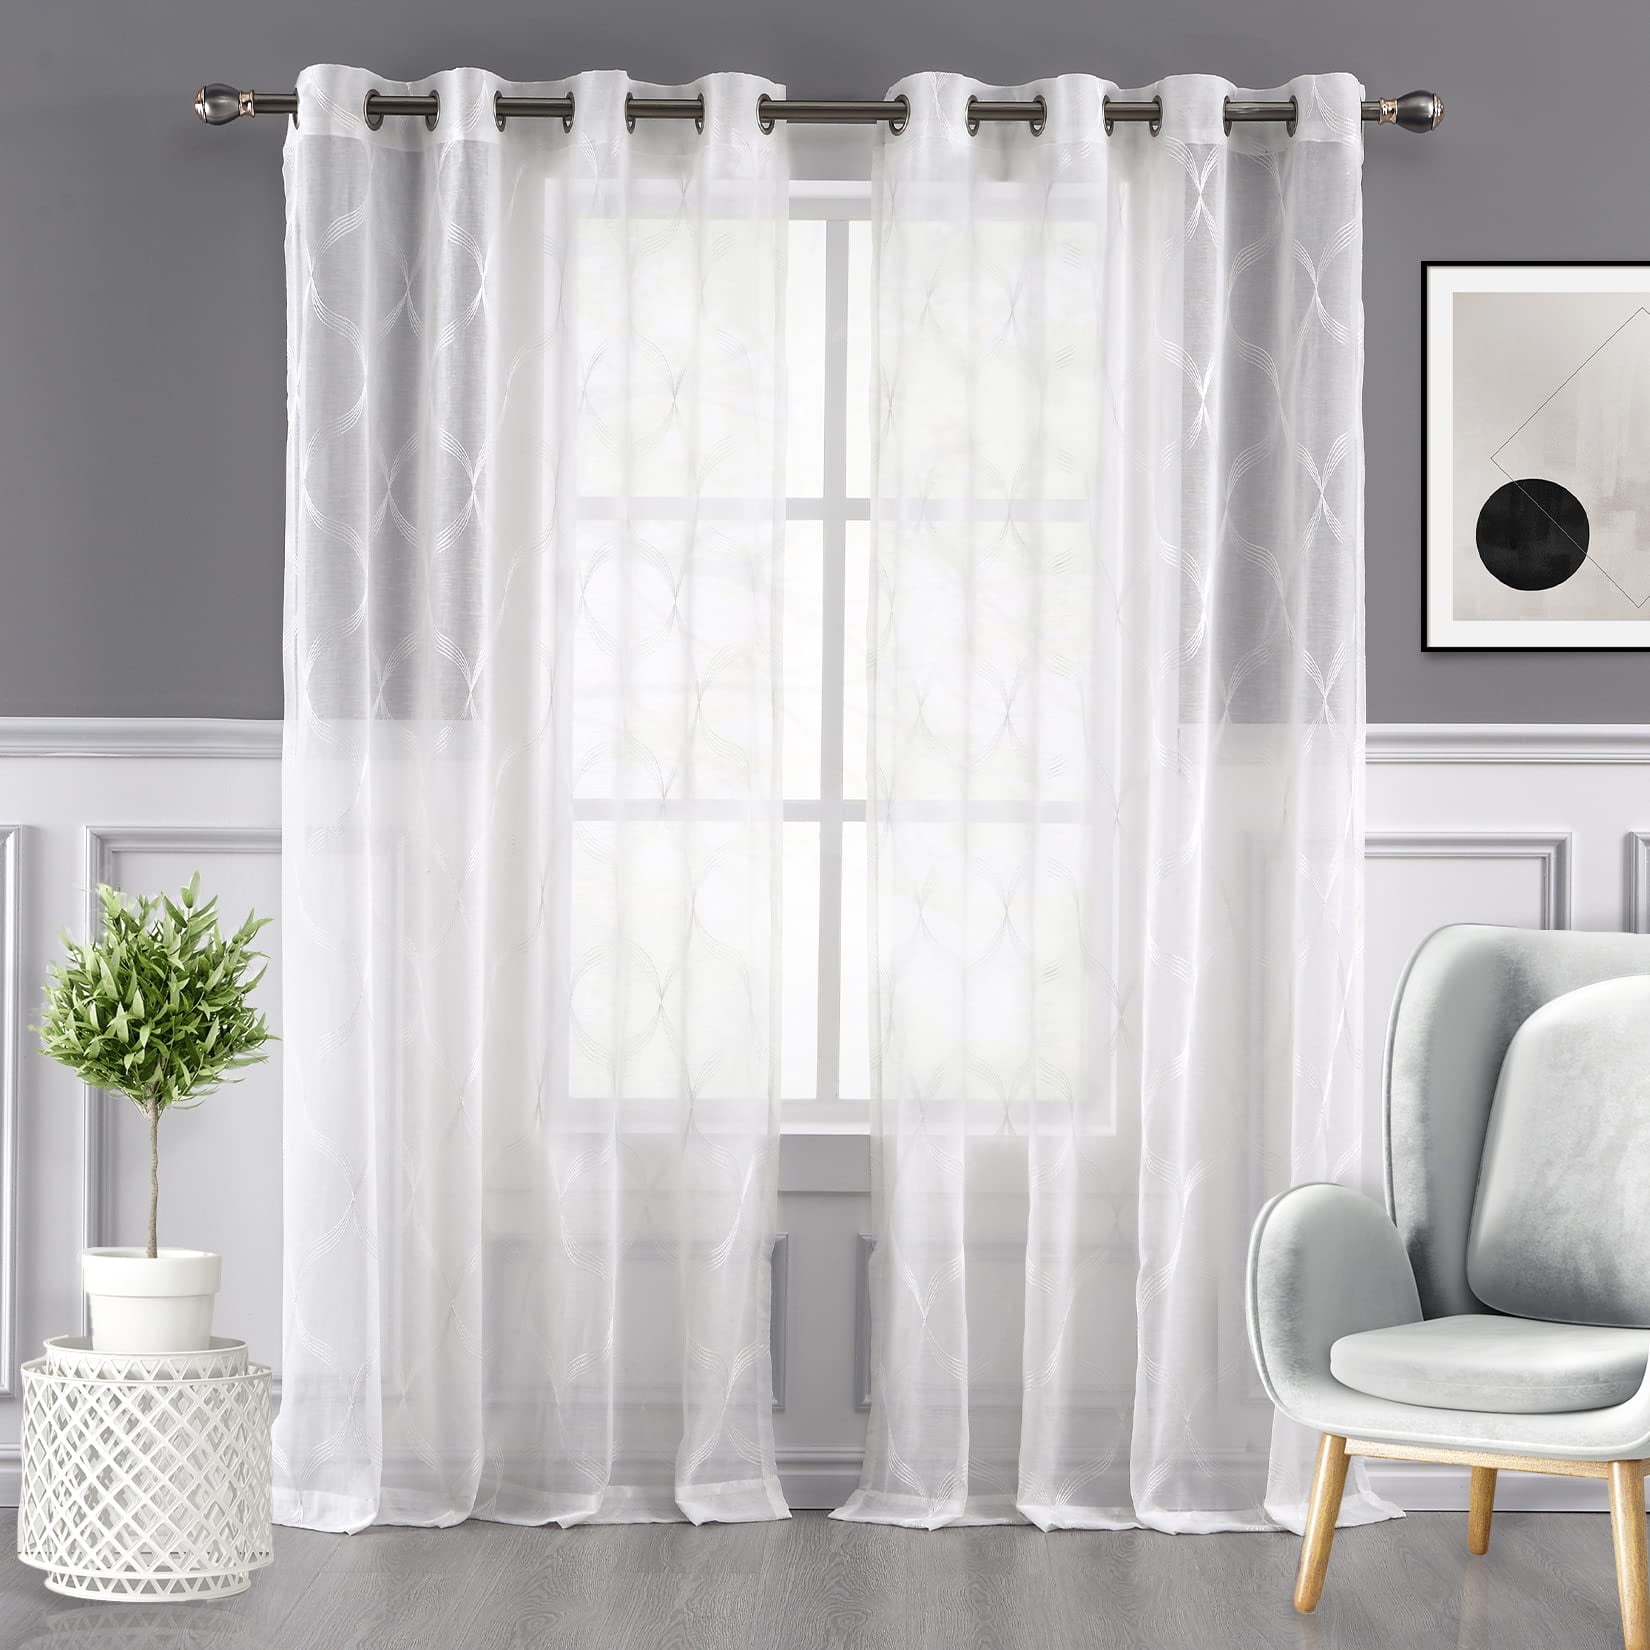 DSstyles Linen Sheer Curtains for Living Room, Voile Window